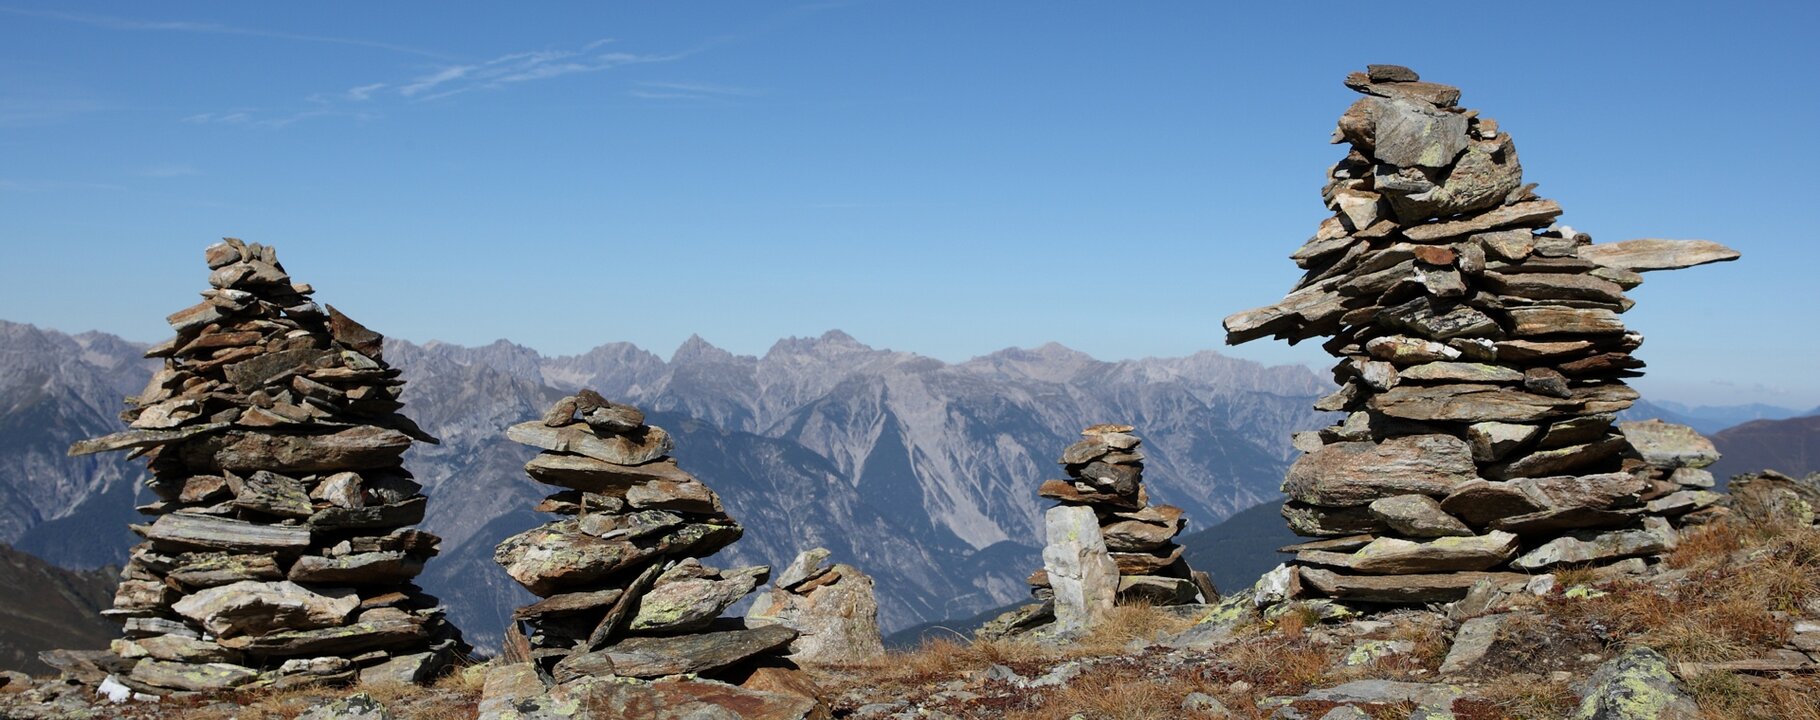 Hiking in Serfaus-Fiss-Ladis in Tyrol Austria | © Andreas Kirschner